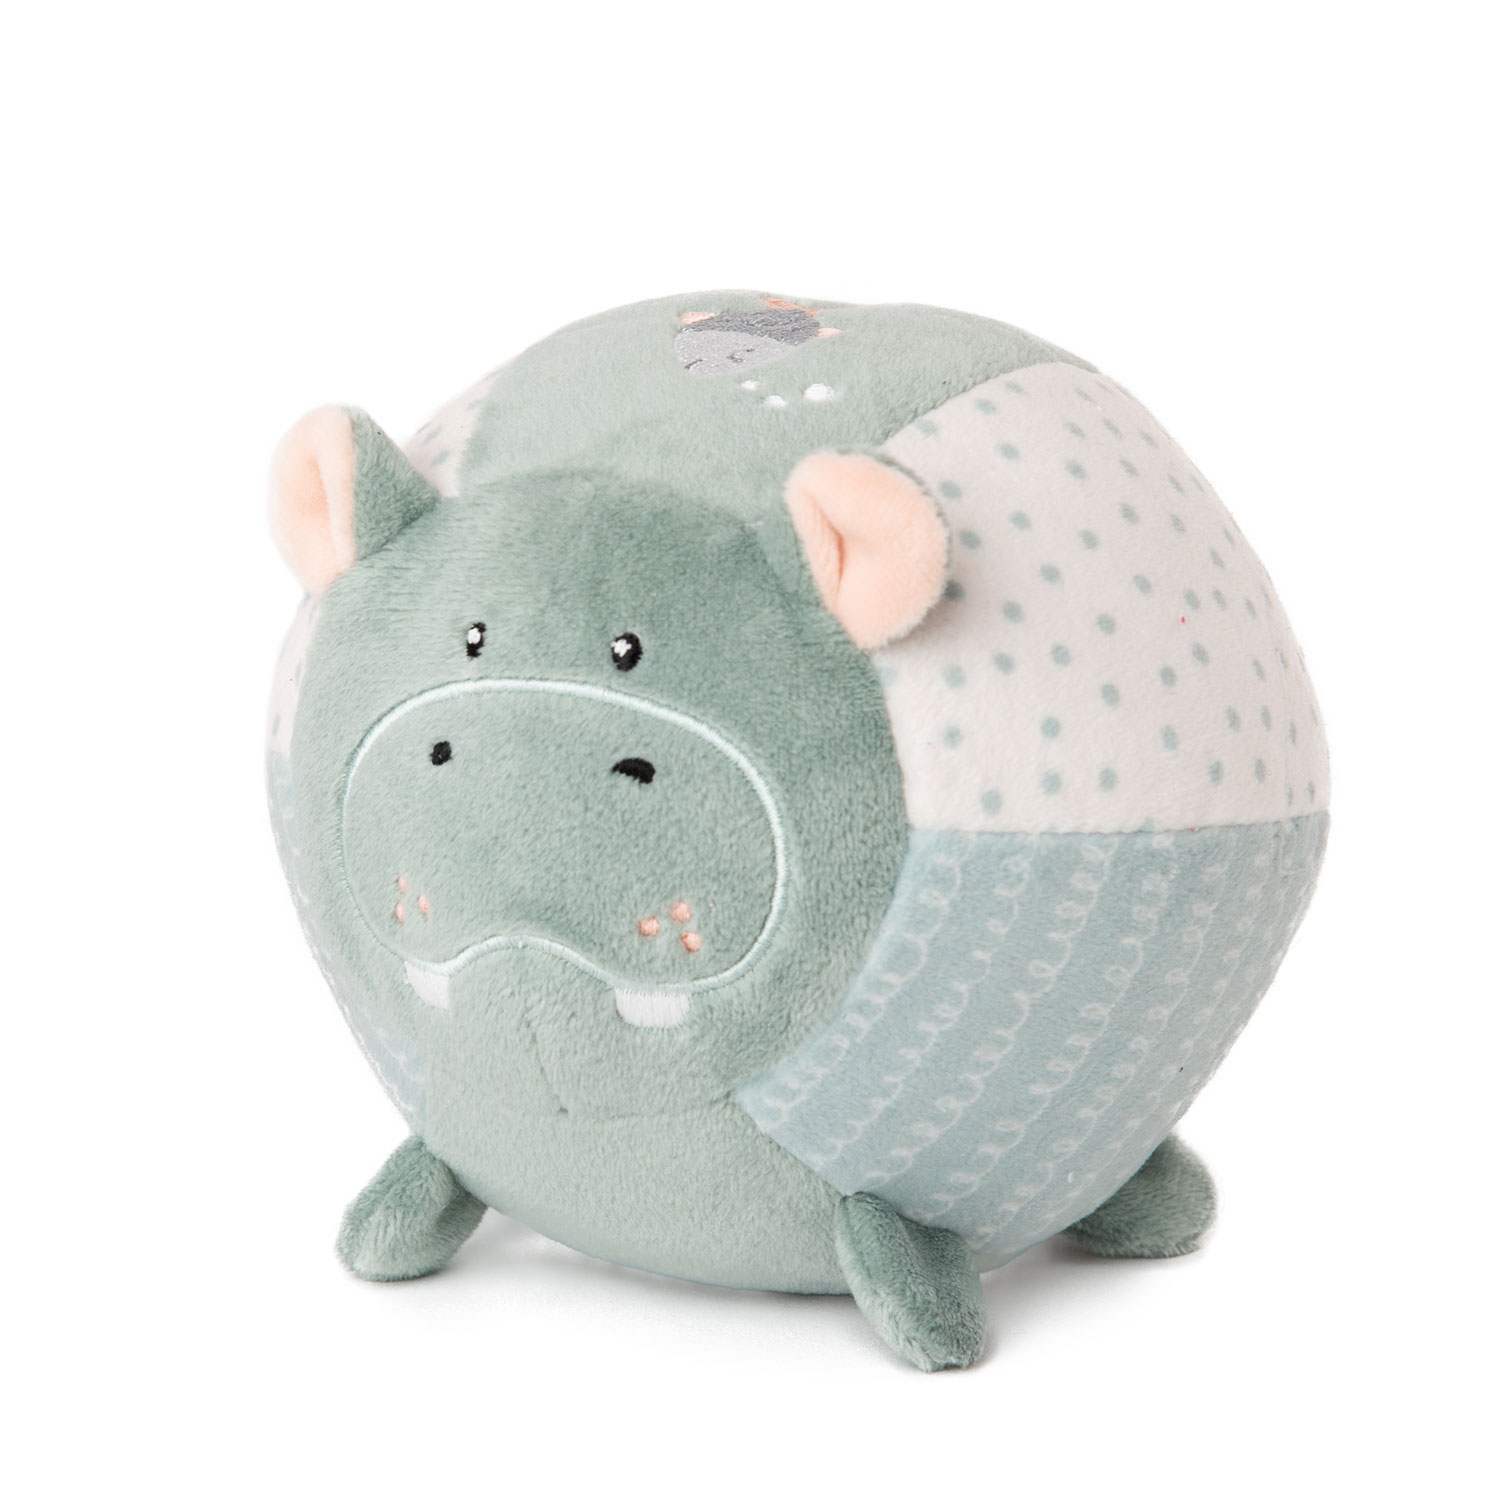 Soft baby round toy - Hippo